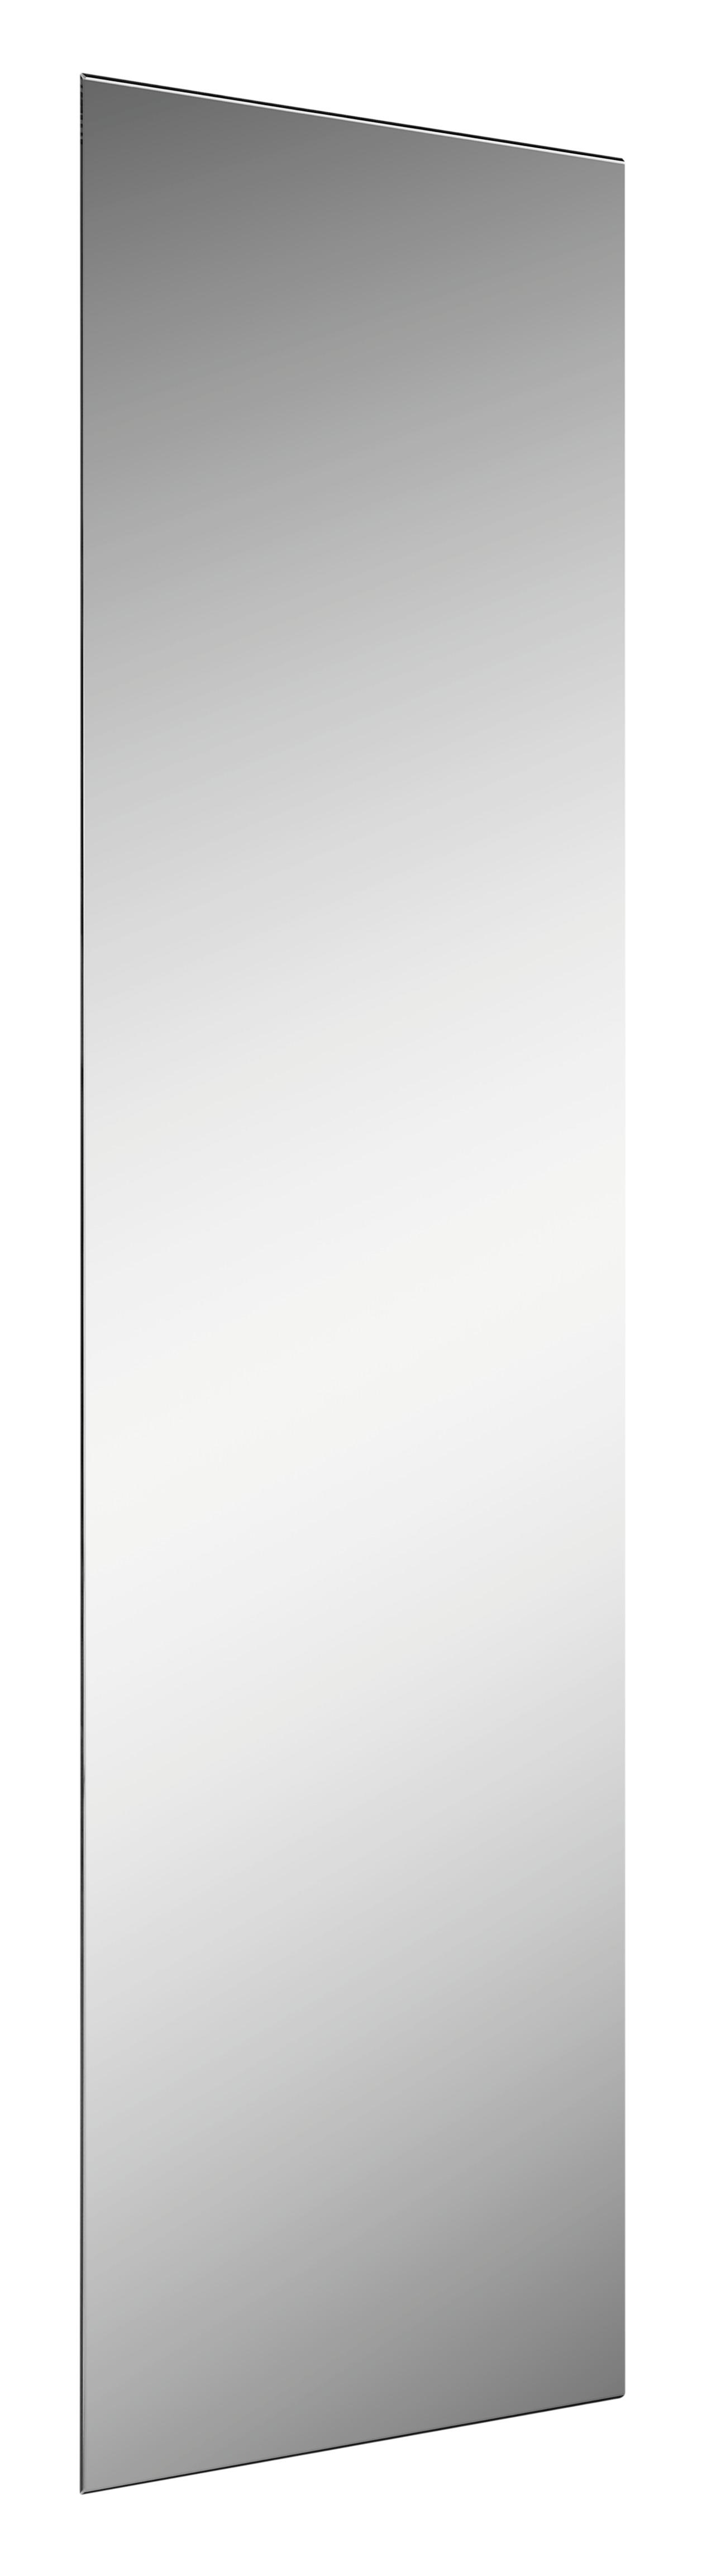 OGLEDALO ZIDNO MESSINA - srebrne boje, Basics (35/140cm)